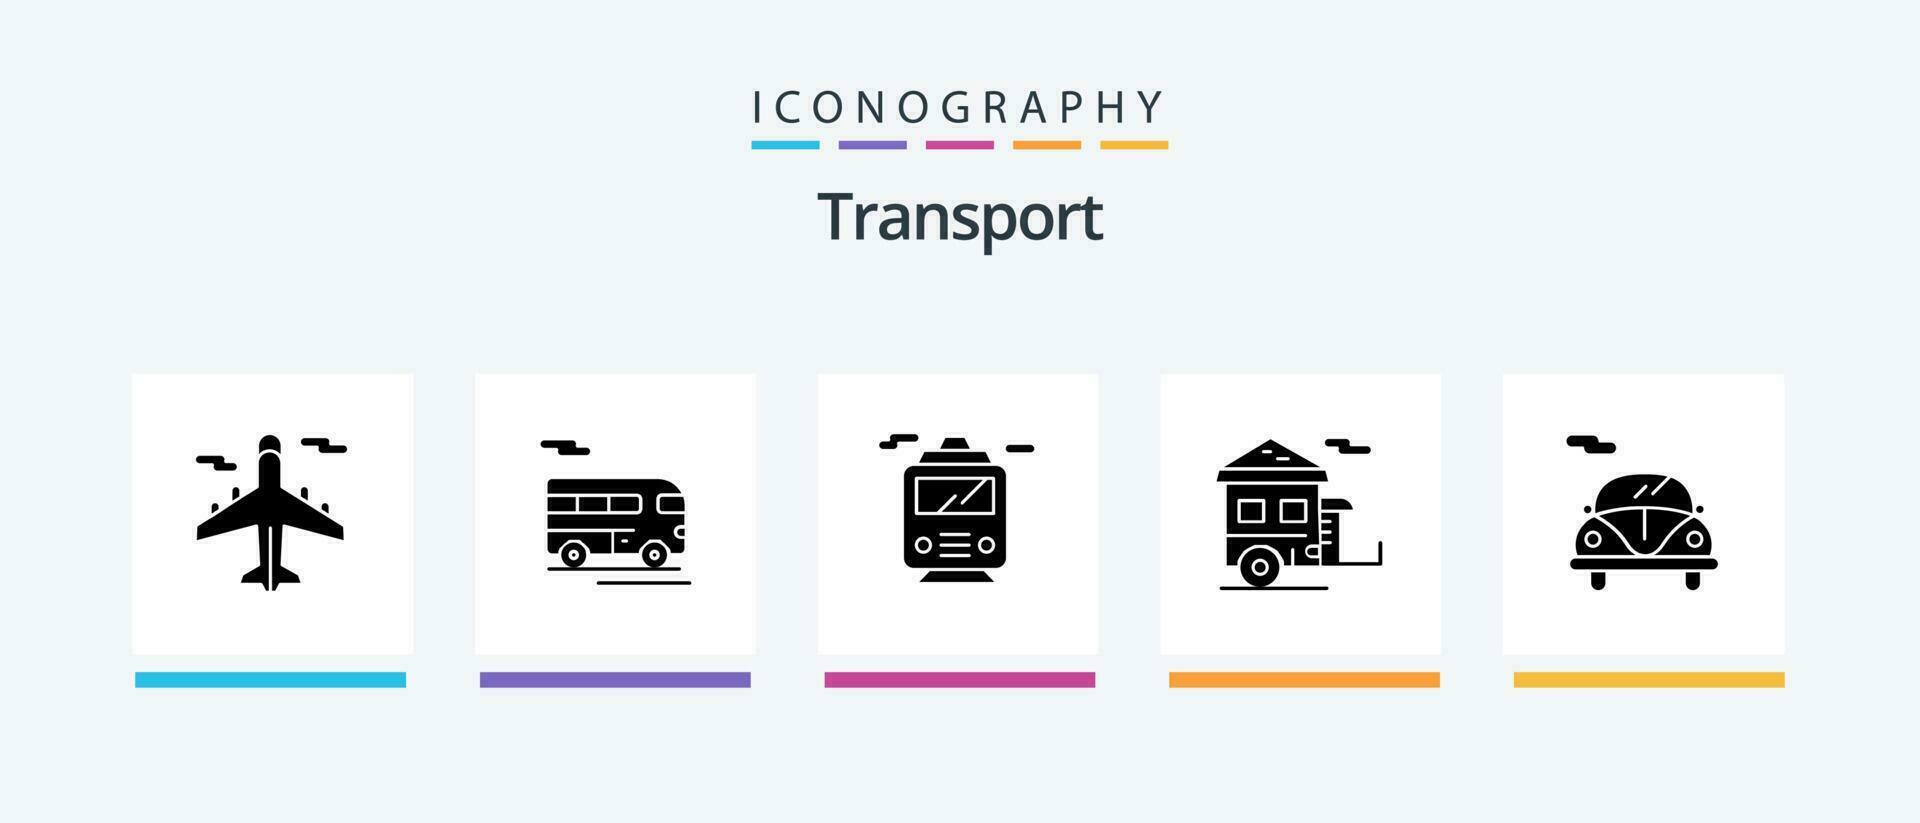 transporte glifo 5 5 icono paquete incluso coche. transporte. tren. remolque. cámping. creativo íconos diseño vector